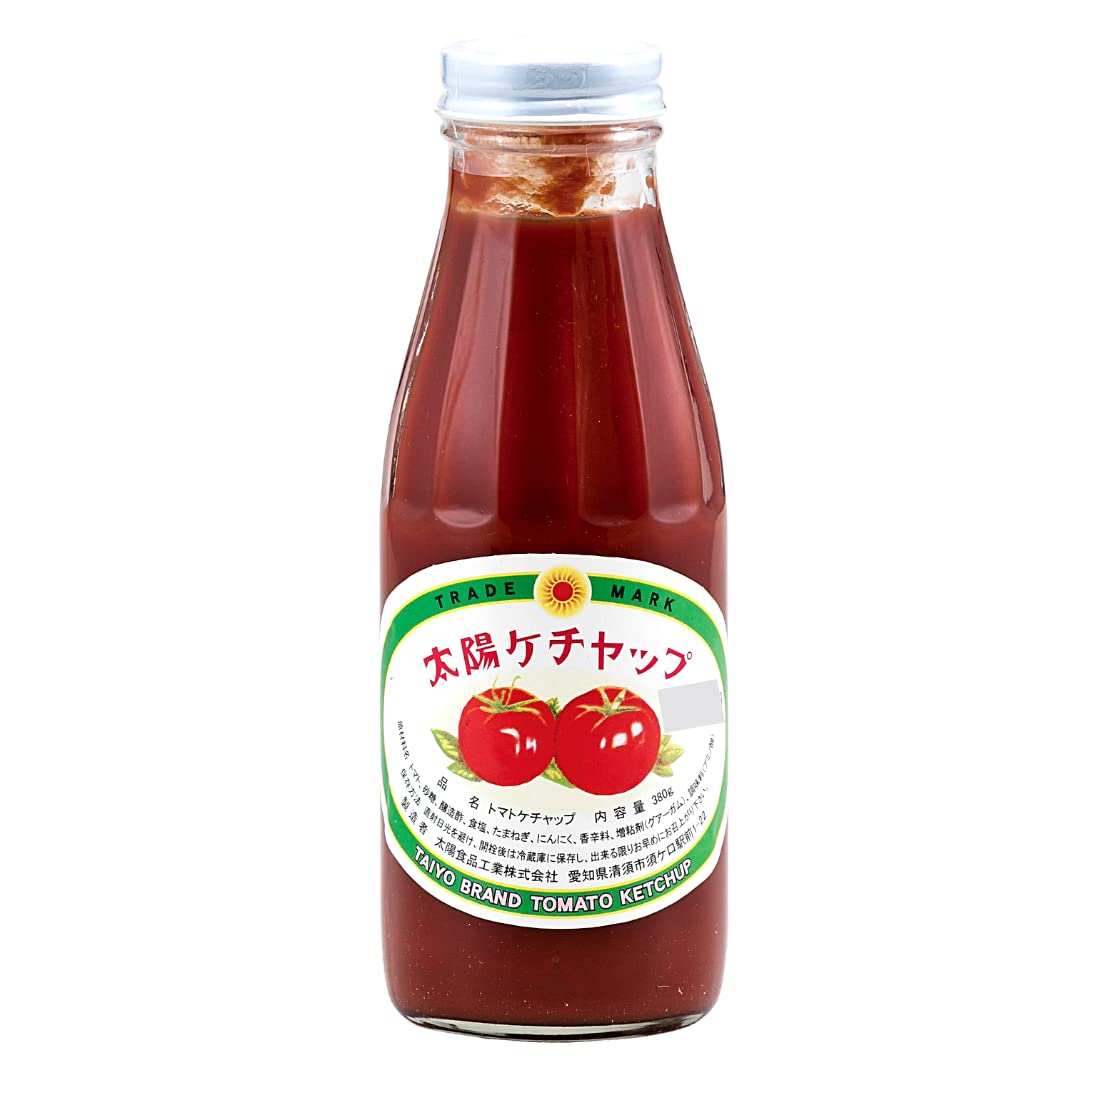 Taiyo Shokuhin Kougyou Launches New Tomato Sauce Products